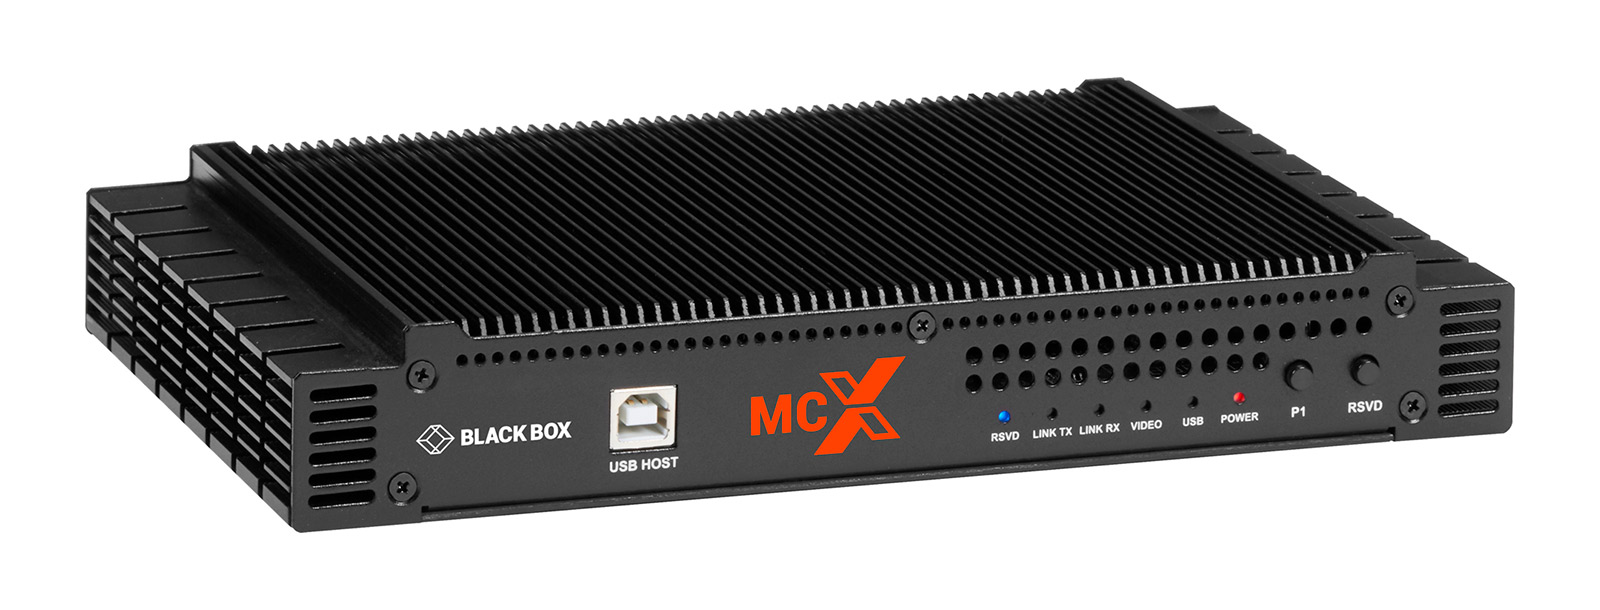 MCX de Black Box